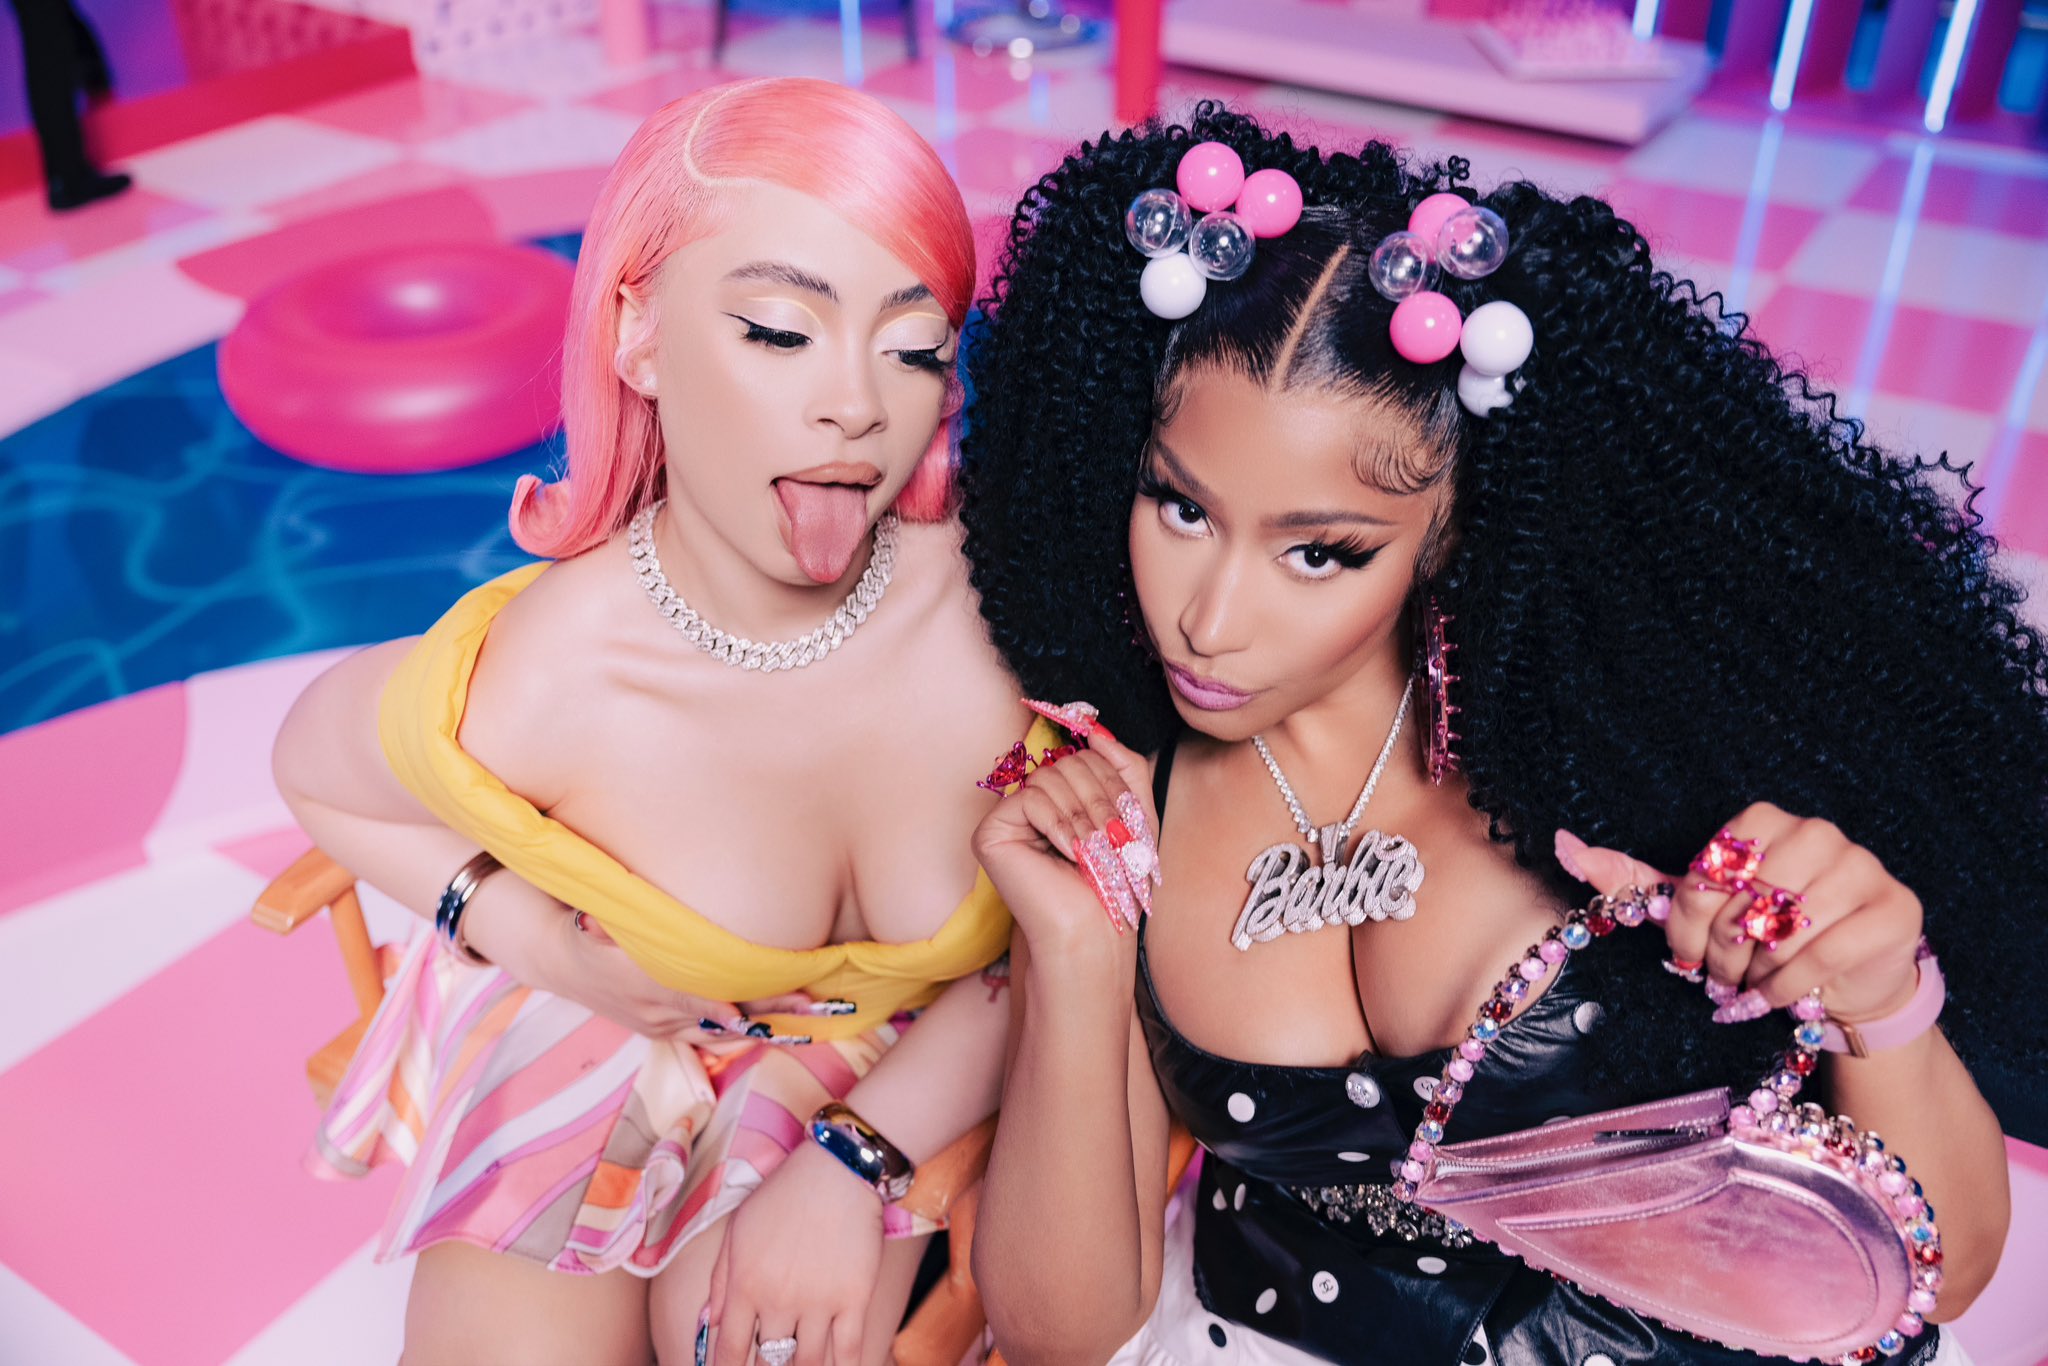 Hot 100: Nicki Minaj & Ice Spice Unbox New Hit as ‘Barbie World’ Makes Top 10 Debut